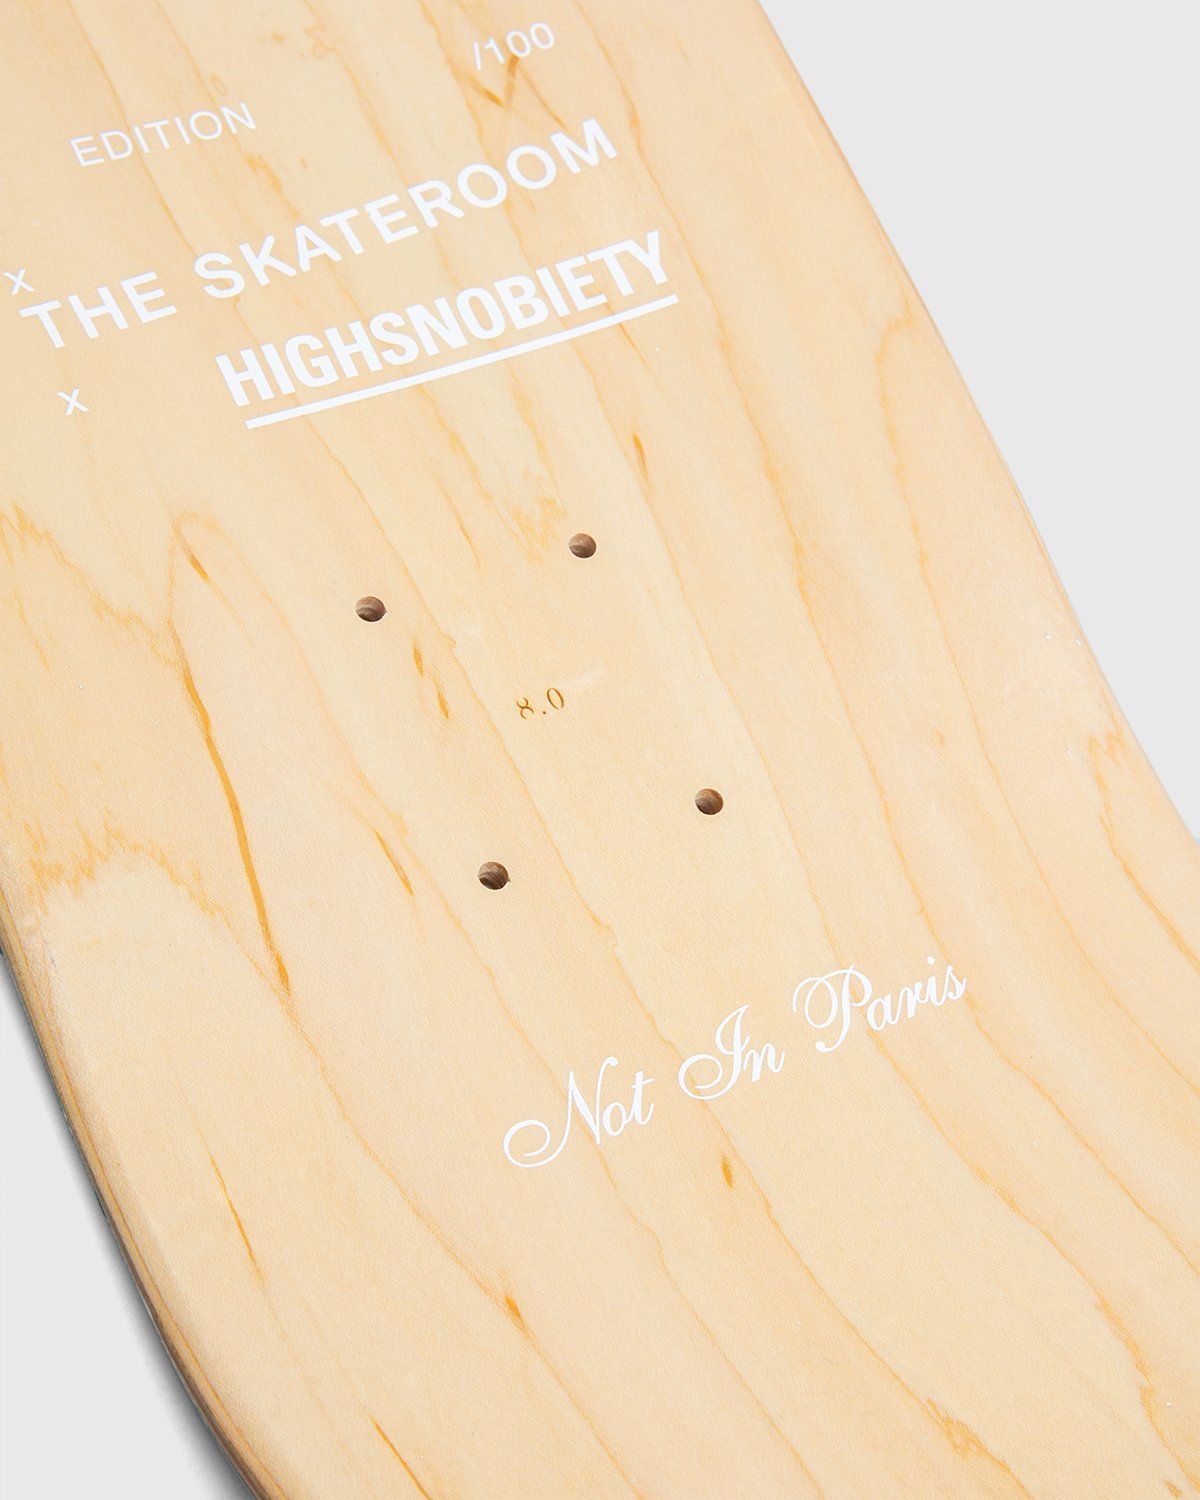 The Skateroom x Highsnobiety – Paul Mccarthy “Tree” Skate Deck Set - Image 4